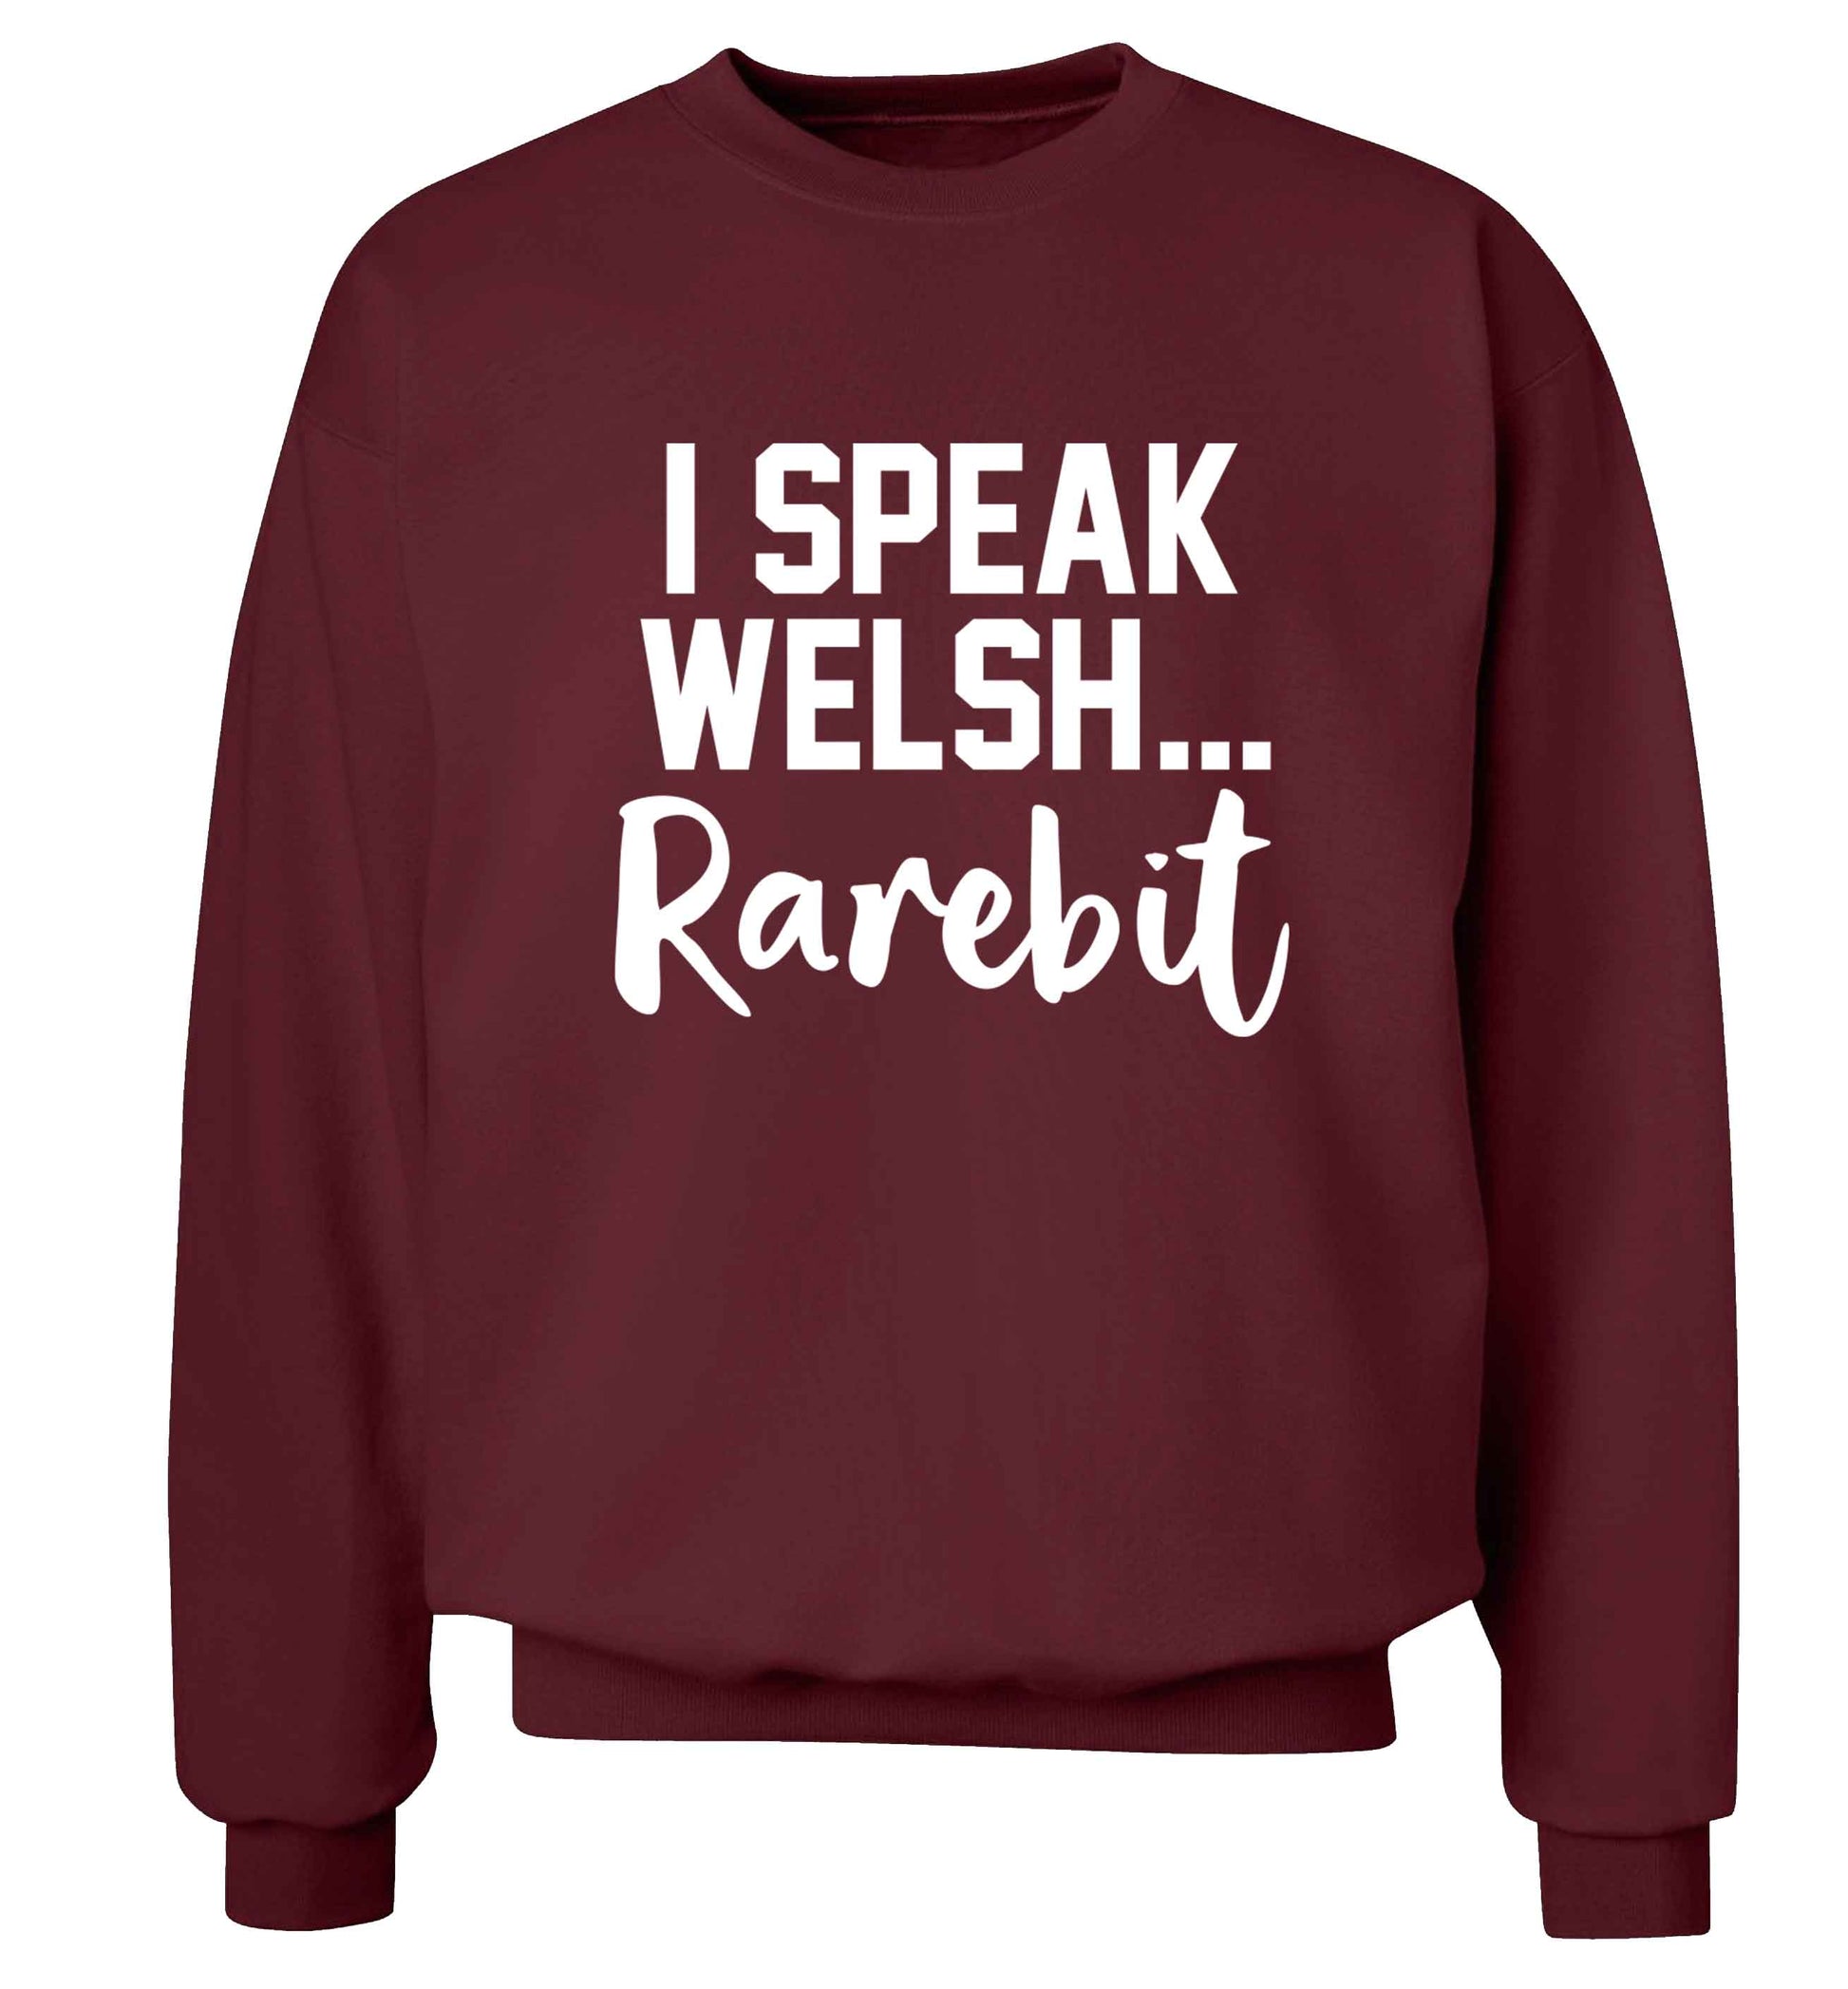 I speak Welsh...rarebit Adult's unisex maroon Sweater 2XL